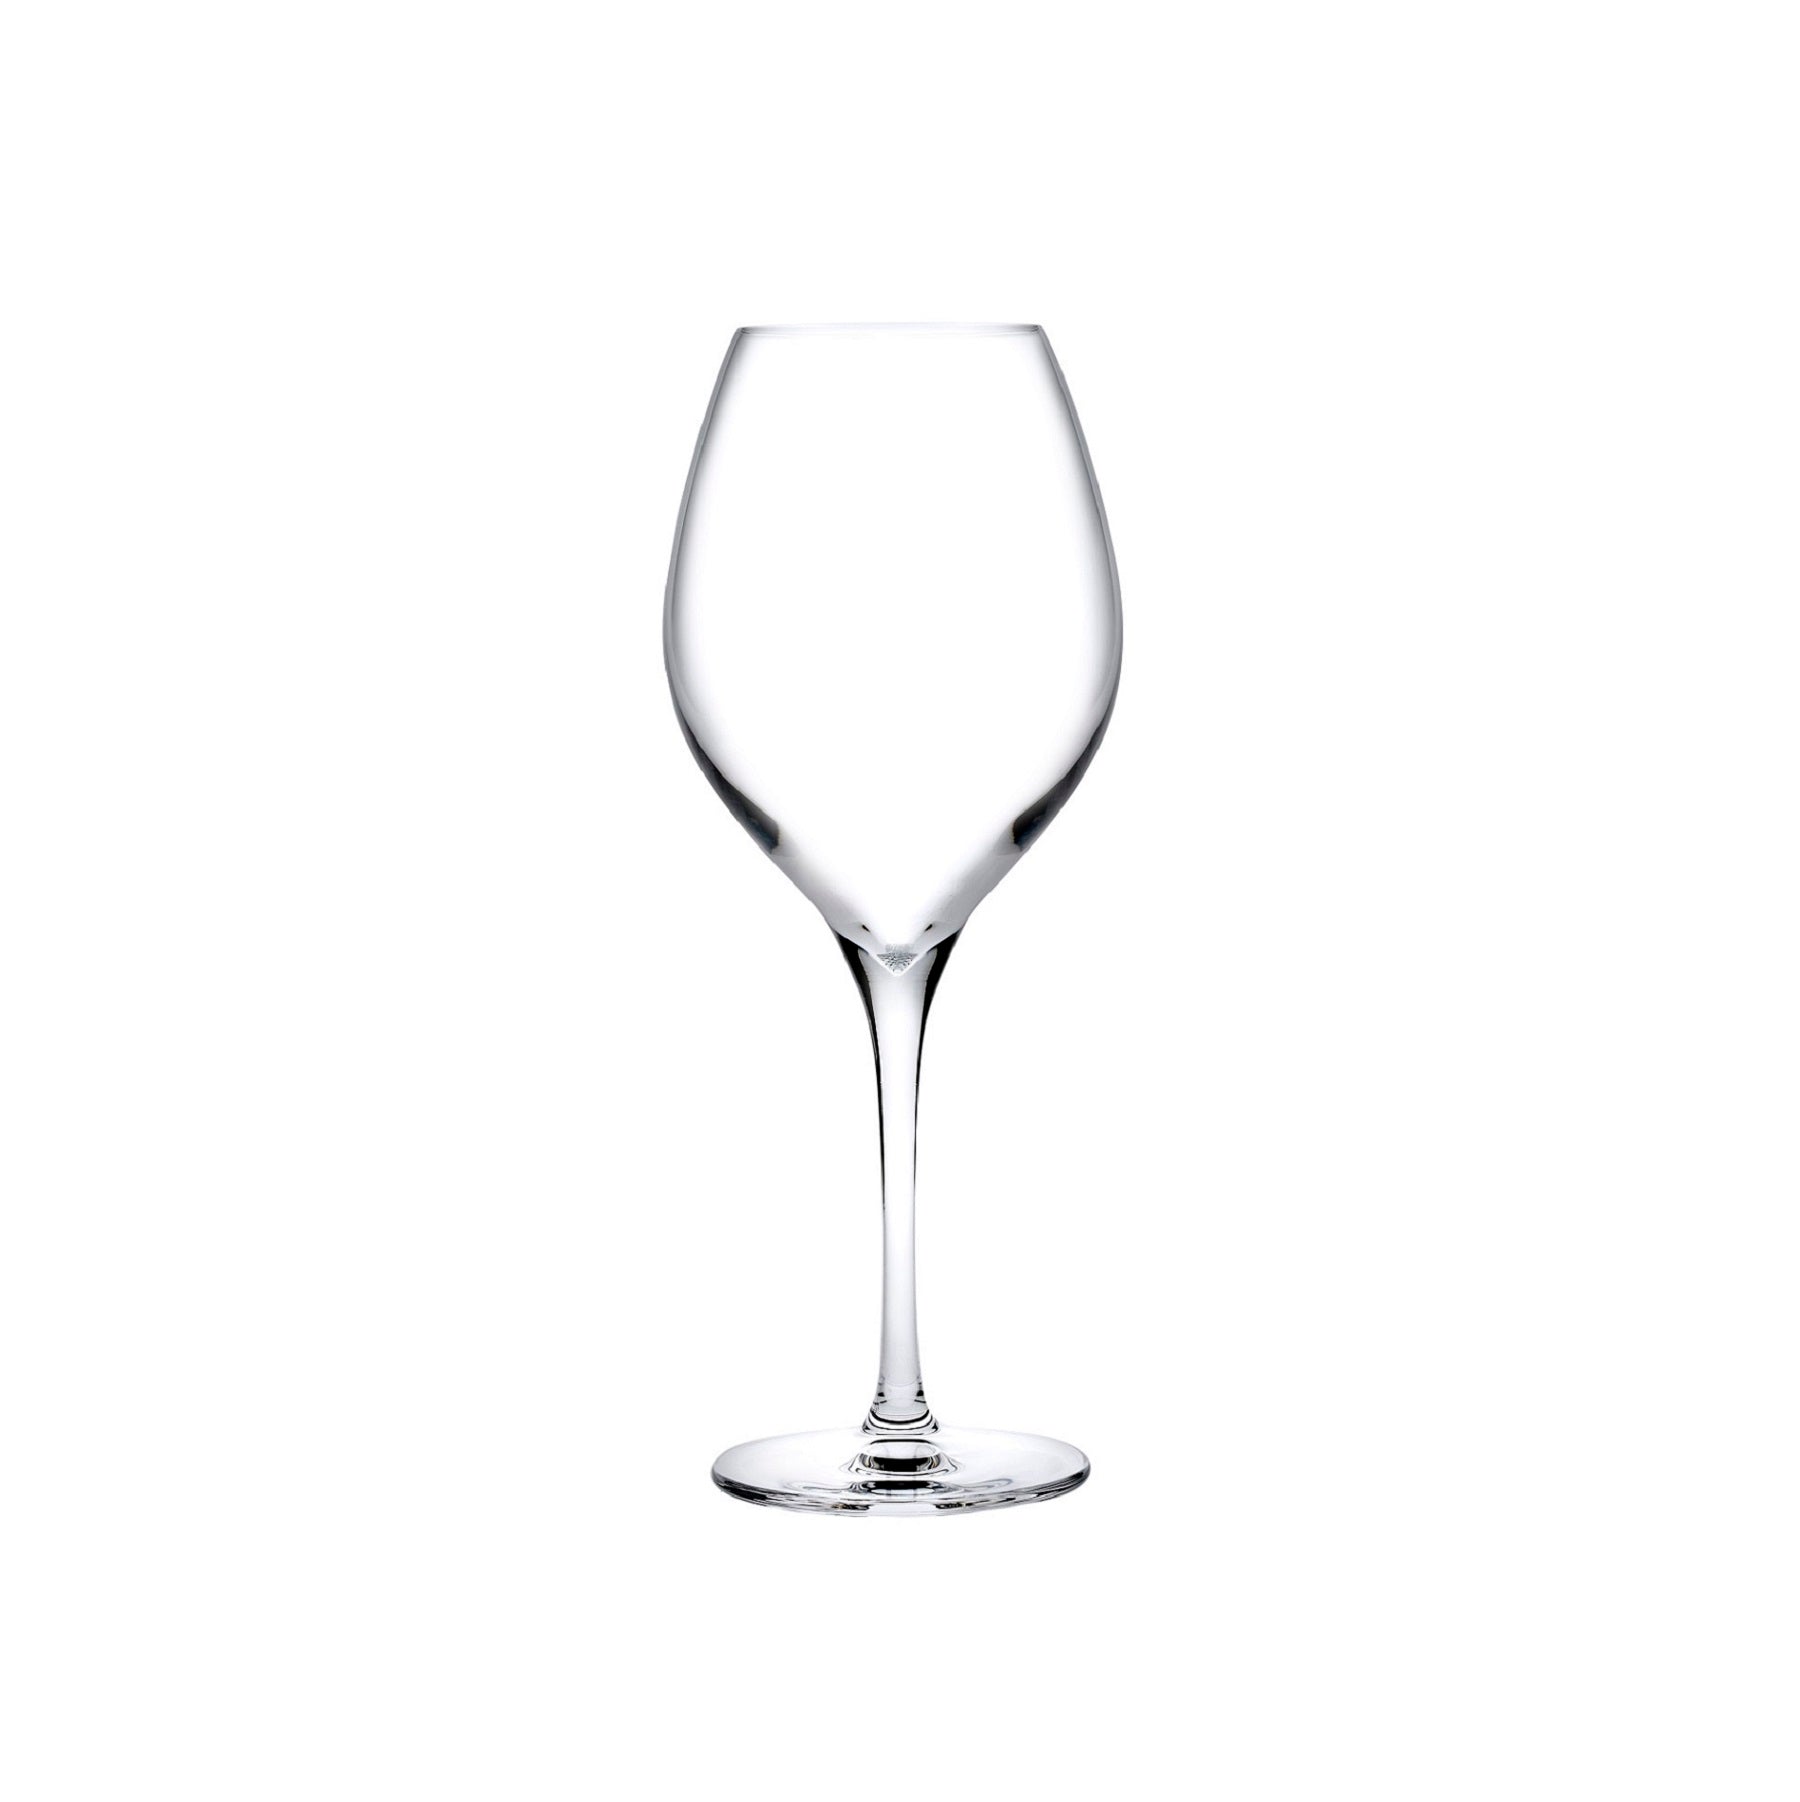 Vinifera İkili Beyaz Şarap Kadehi Seti 360 cc